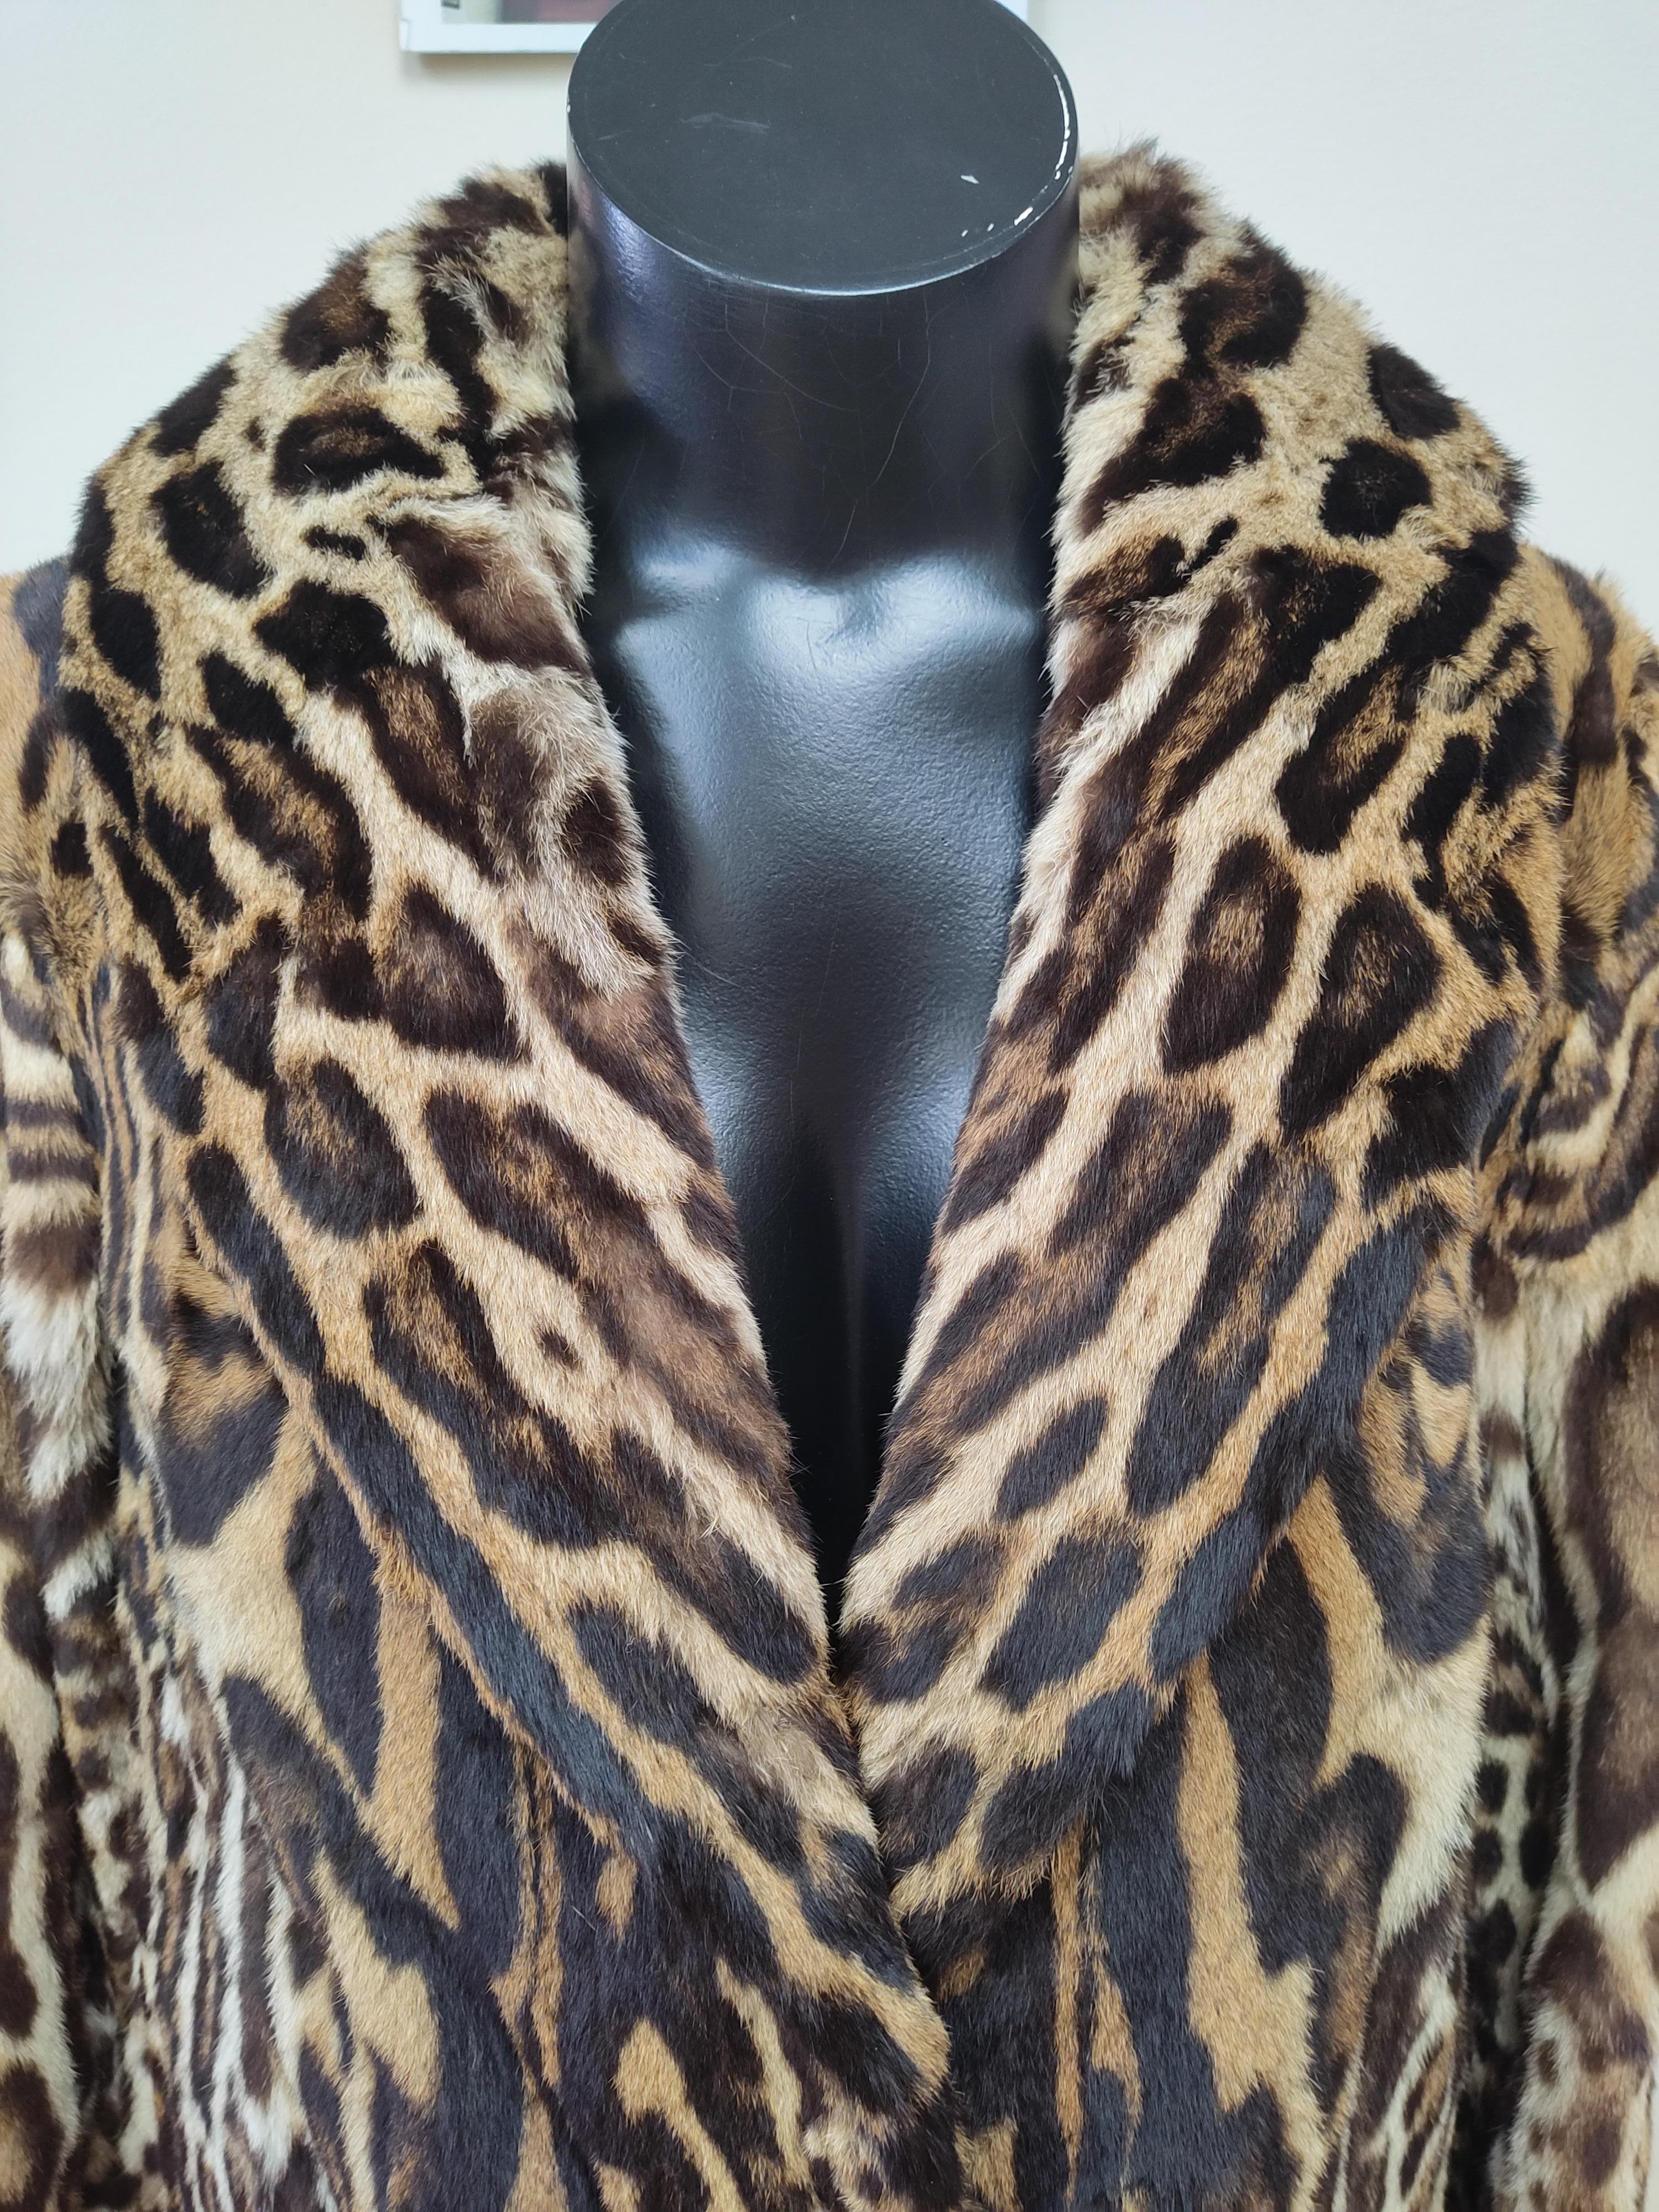 Christian Dior ocelot fur coat size 10 2